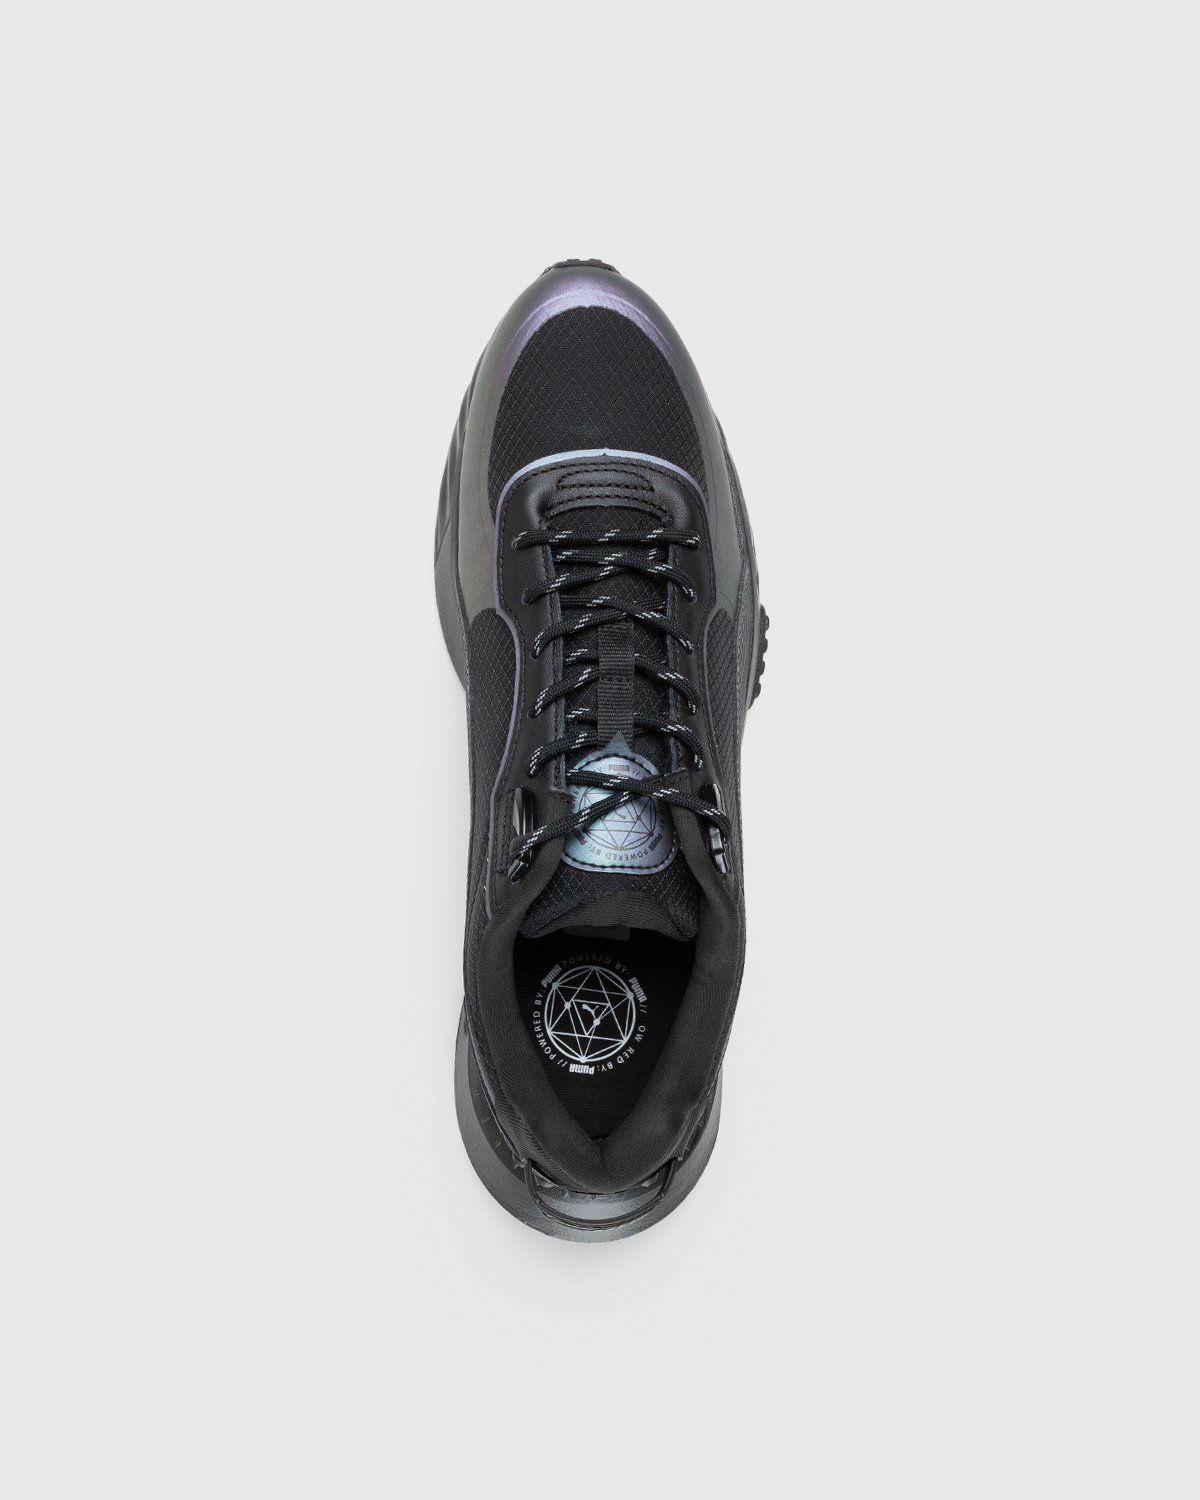 Puma – Wild Rider Grip LS Black - Sneakers - Black - Image 5